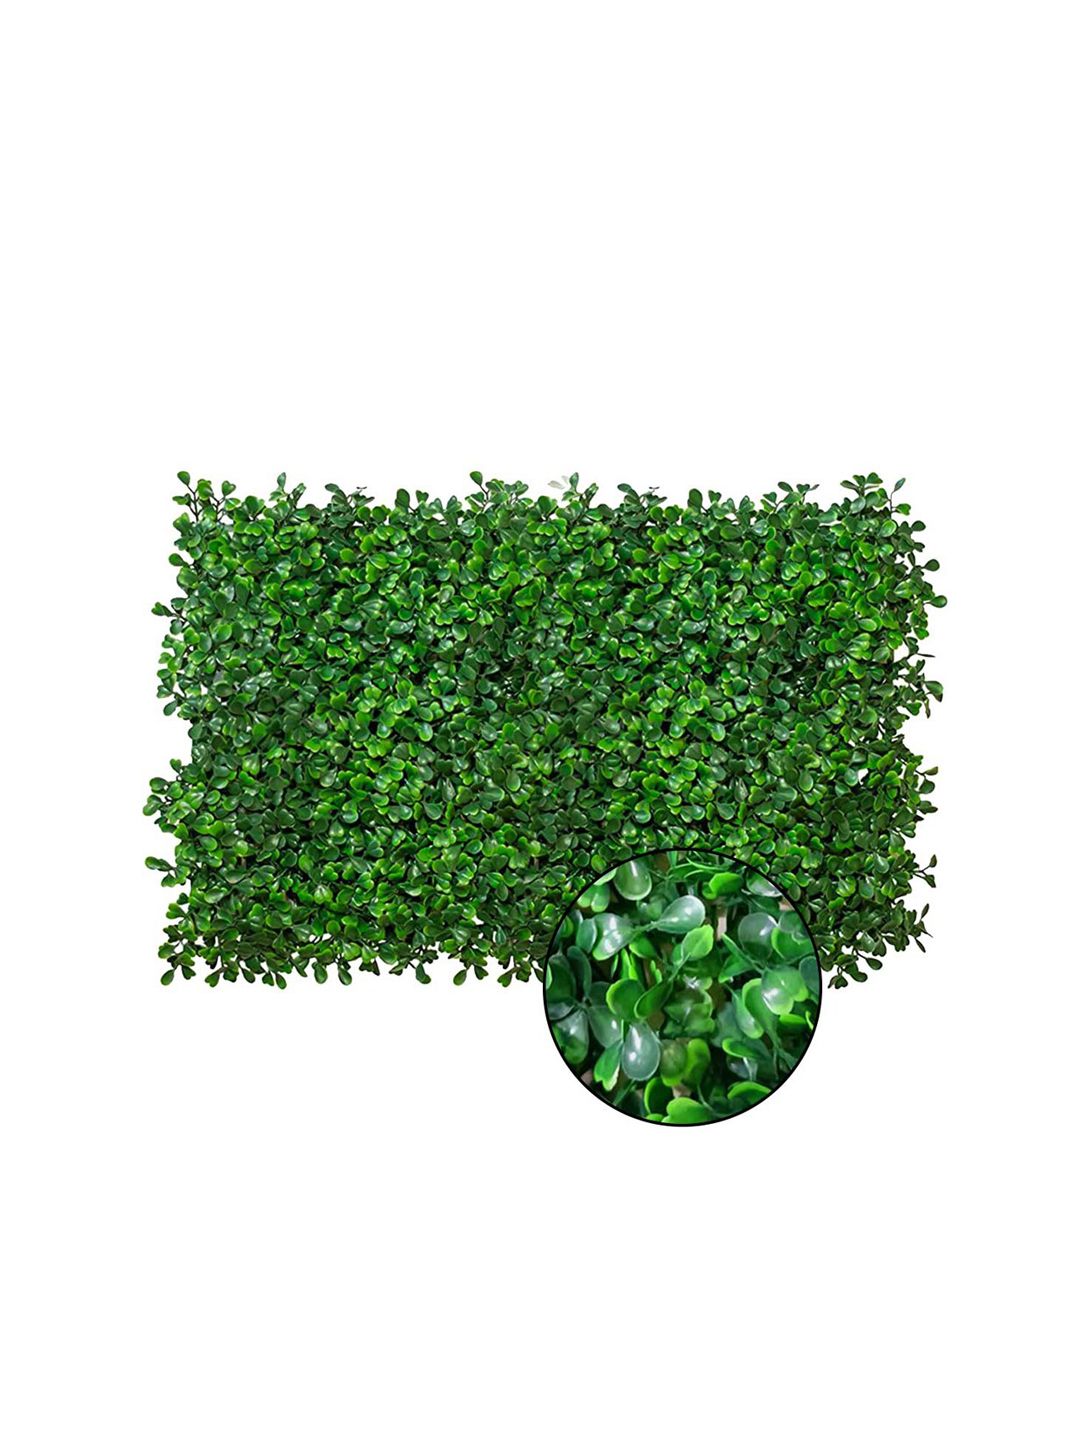 Art Street Green Floor Artificial Grass Price in India